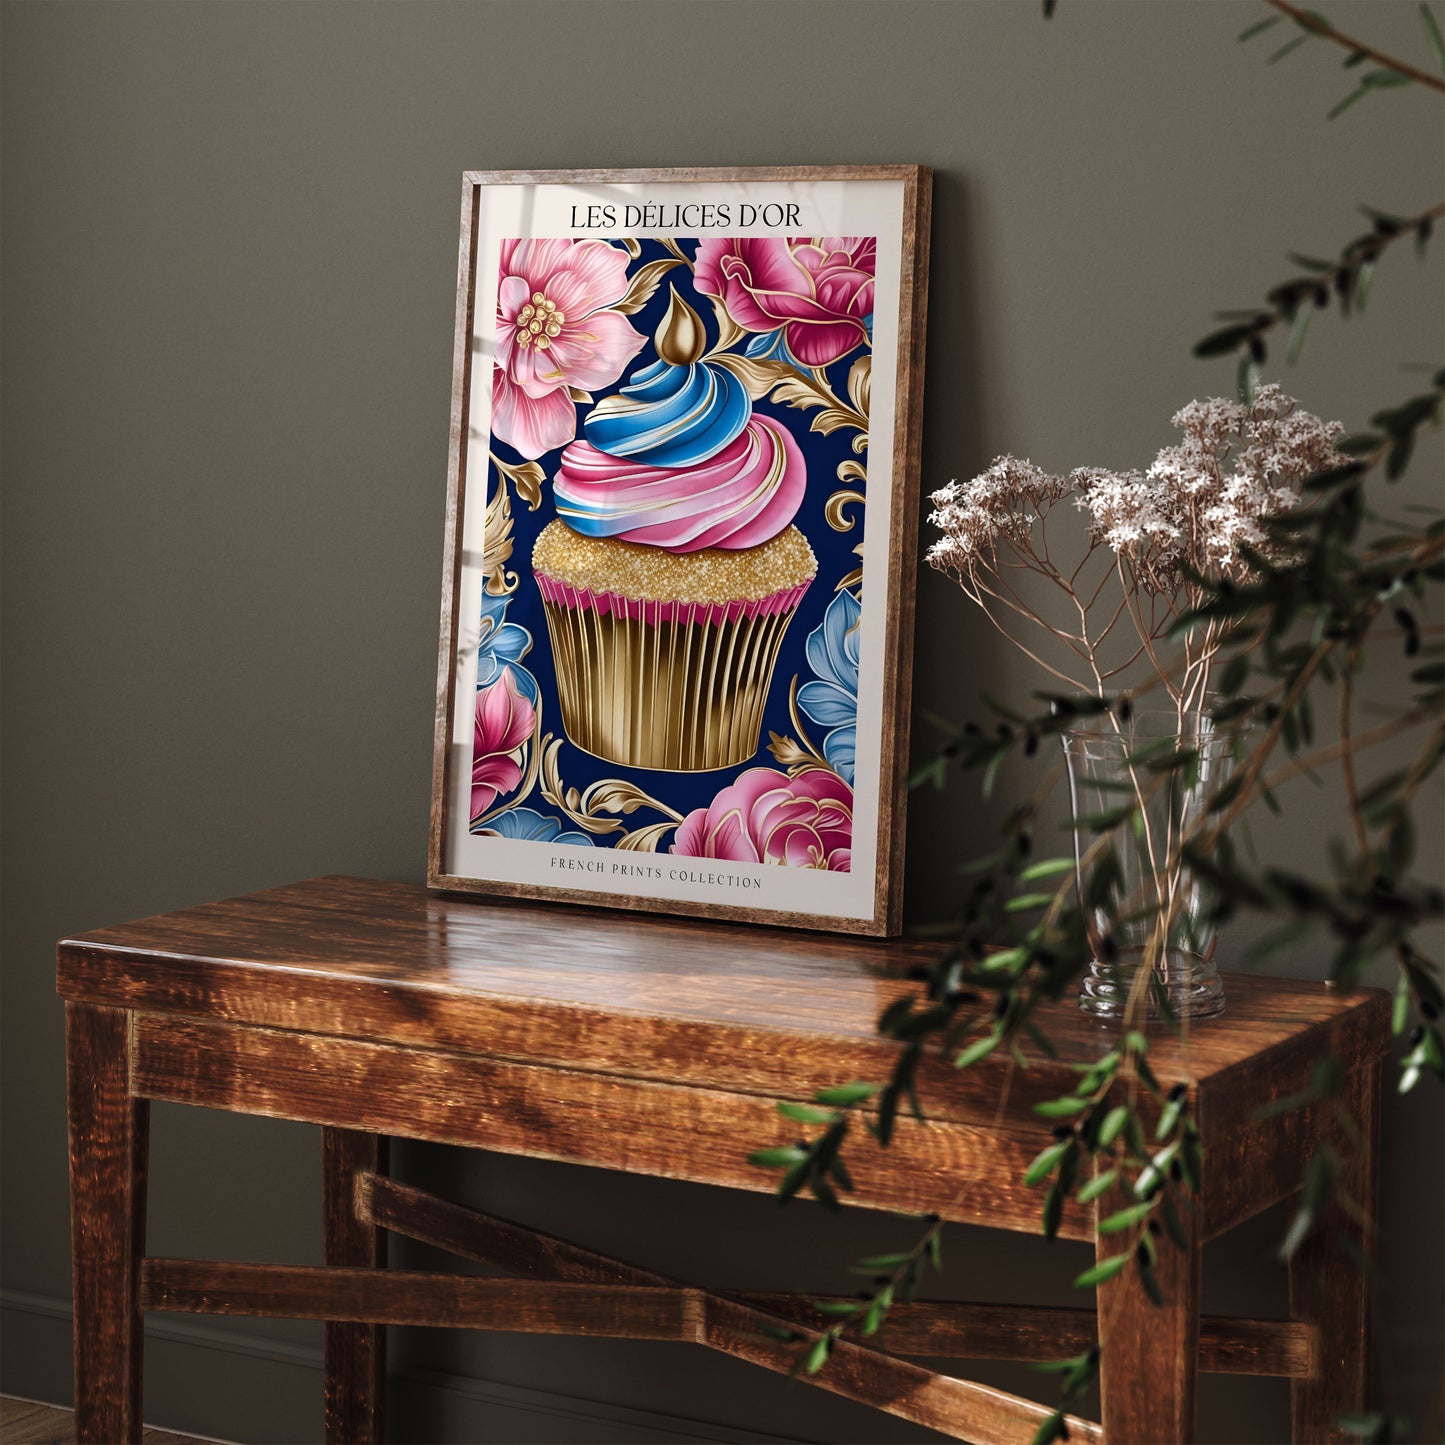 Elegant Patisserie Wall Art: French Bakery Poster Print